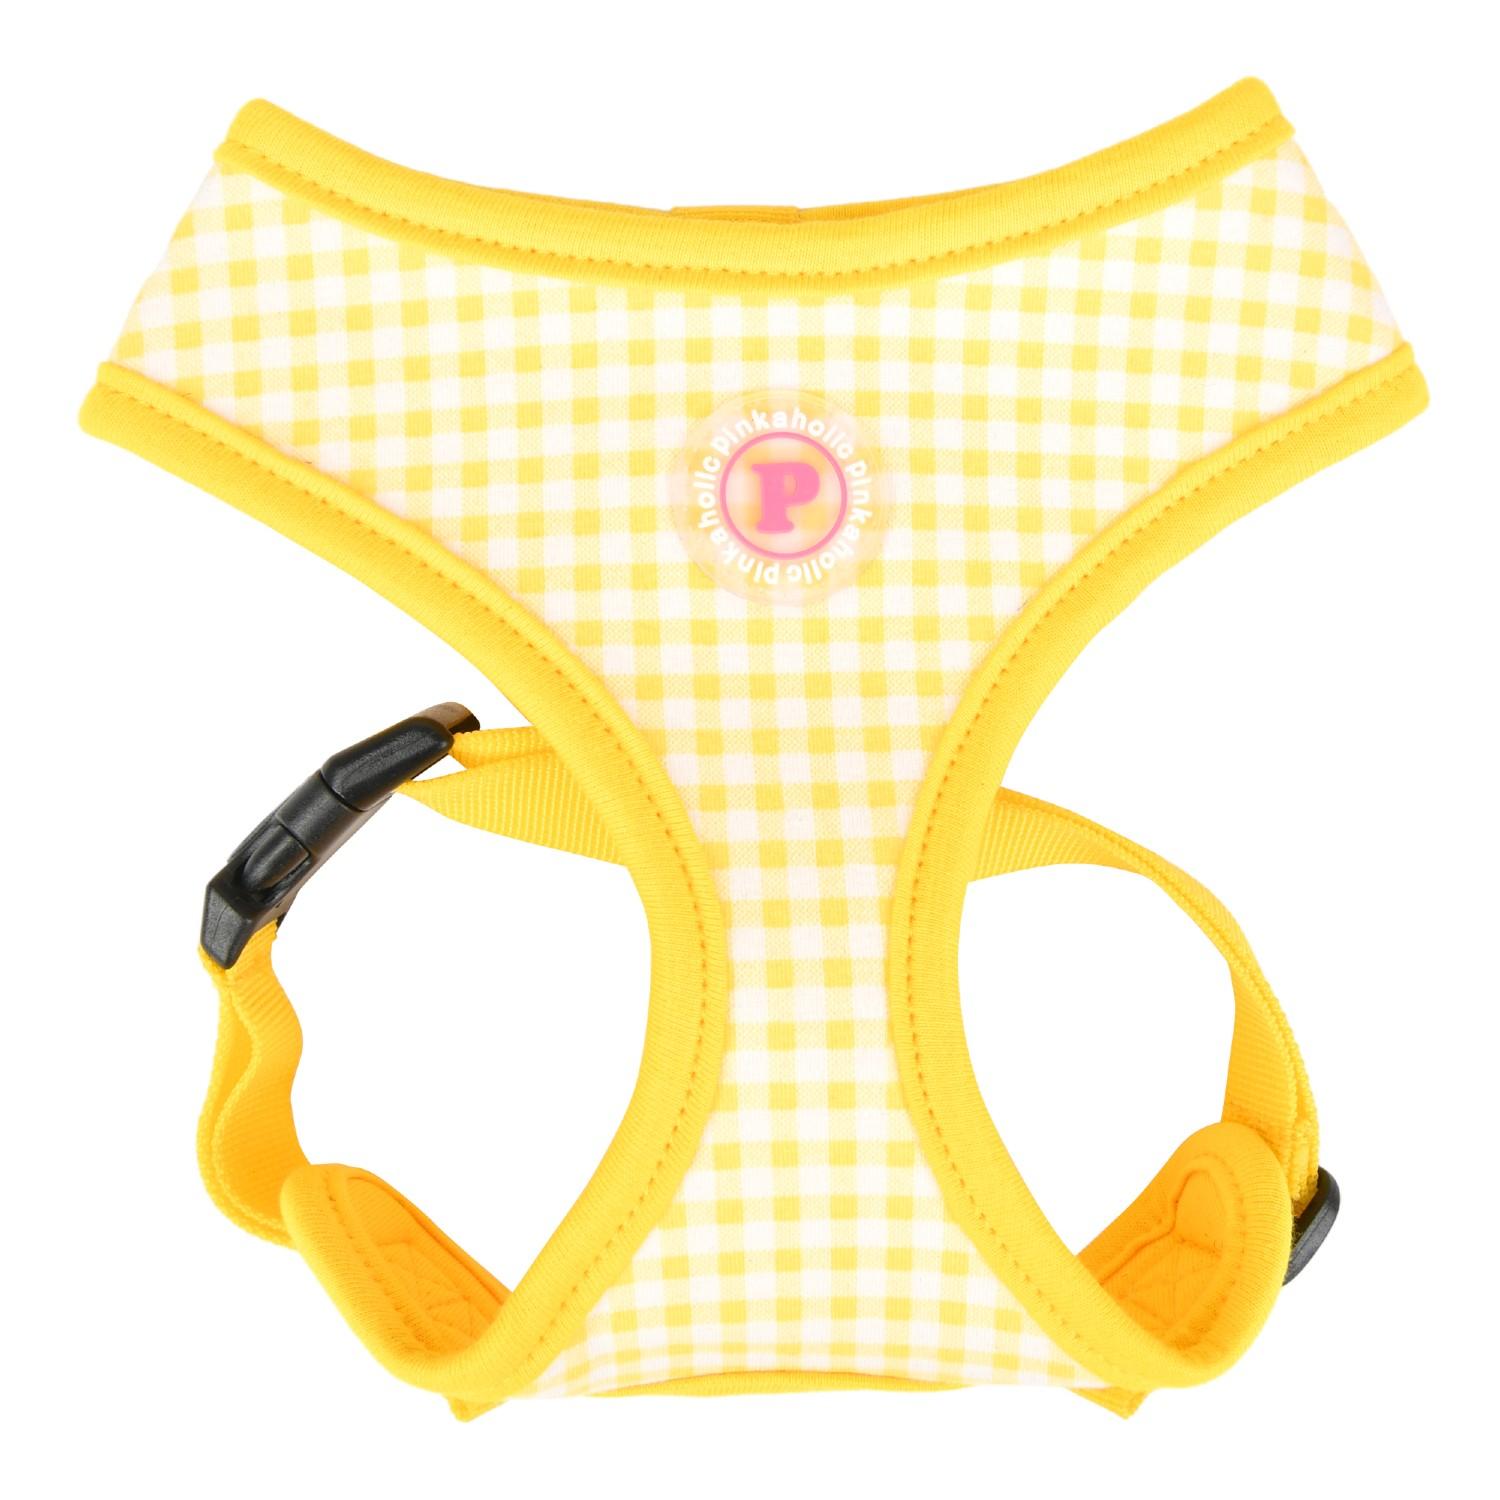 Alaia Basic Style Dog Harness by Pinkaholic - Yellow